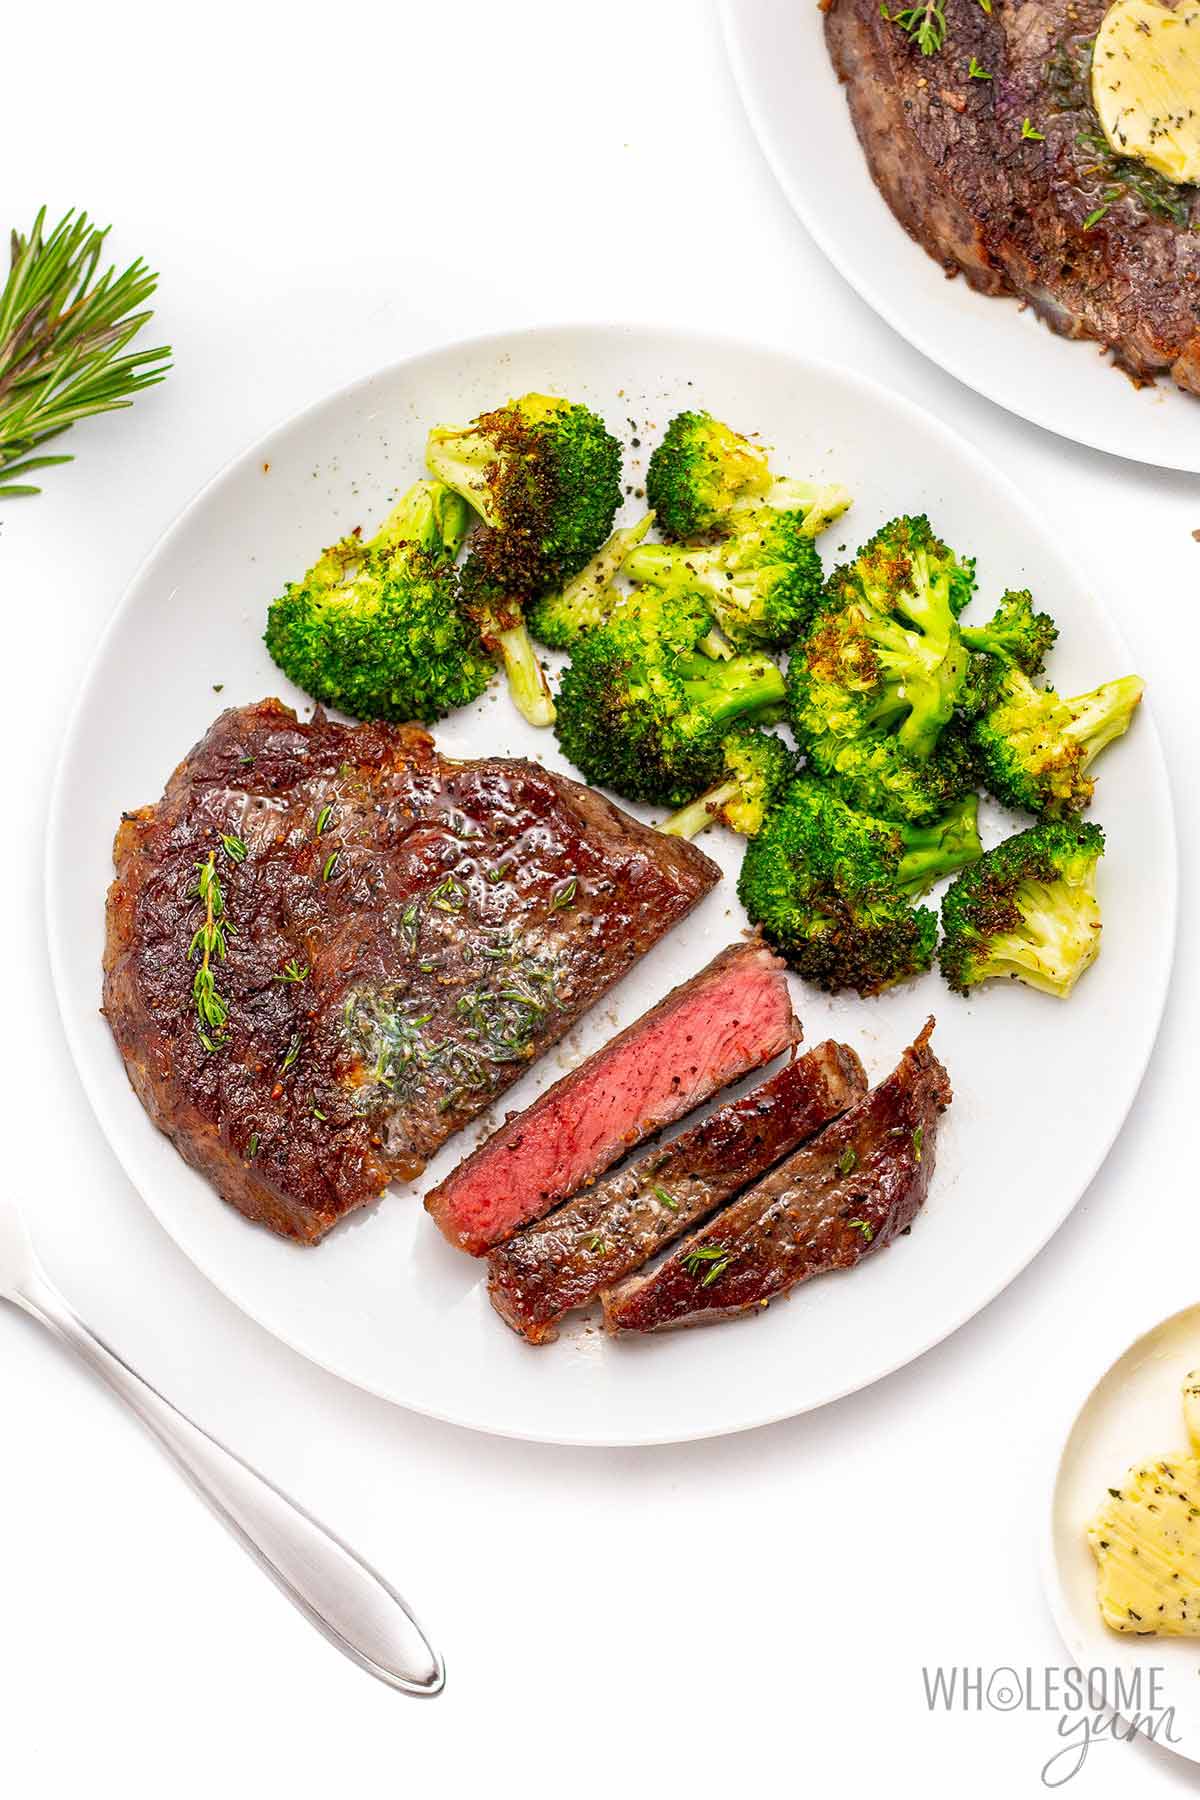 Sliced chuck steak on a plate with broccoli.